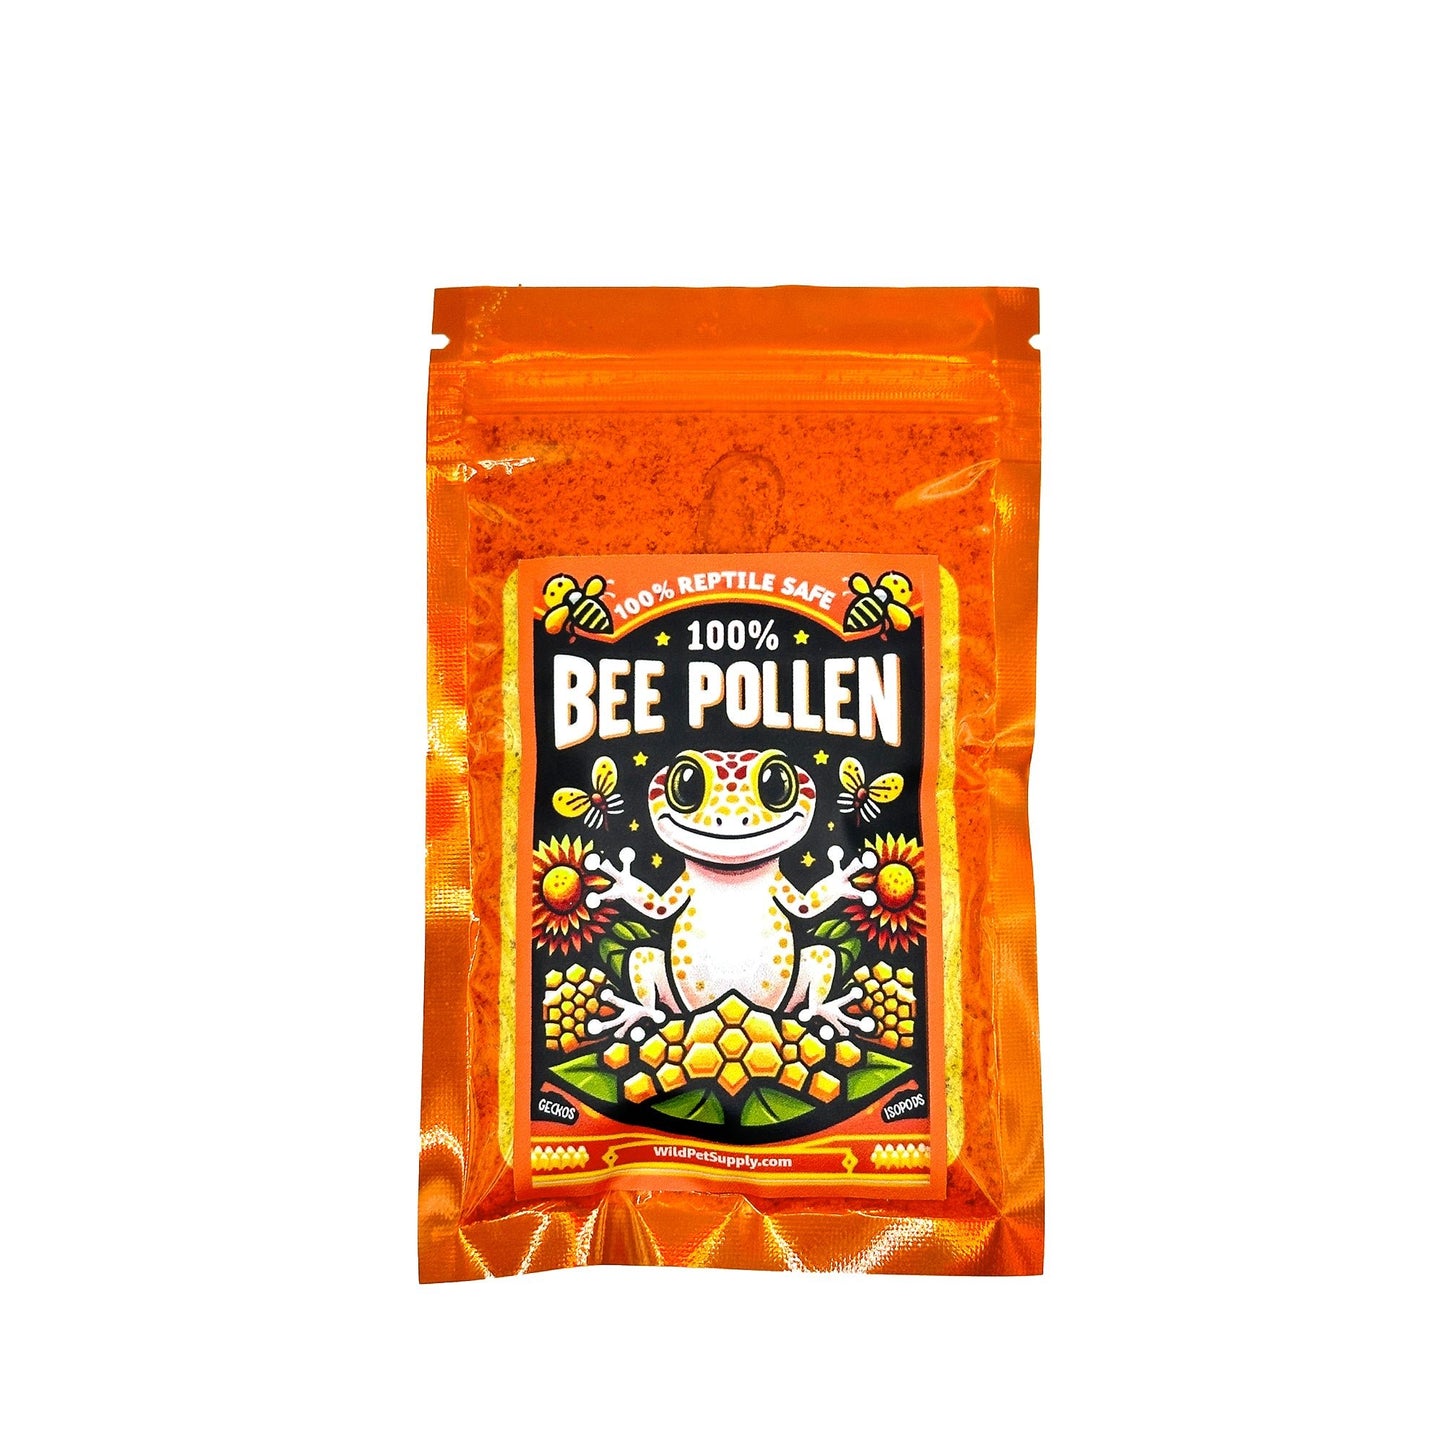 100% Bee Pollen Powder - Food for Reptiles - Wild Pet Supply